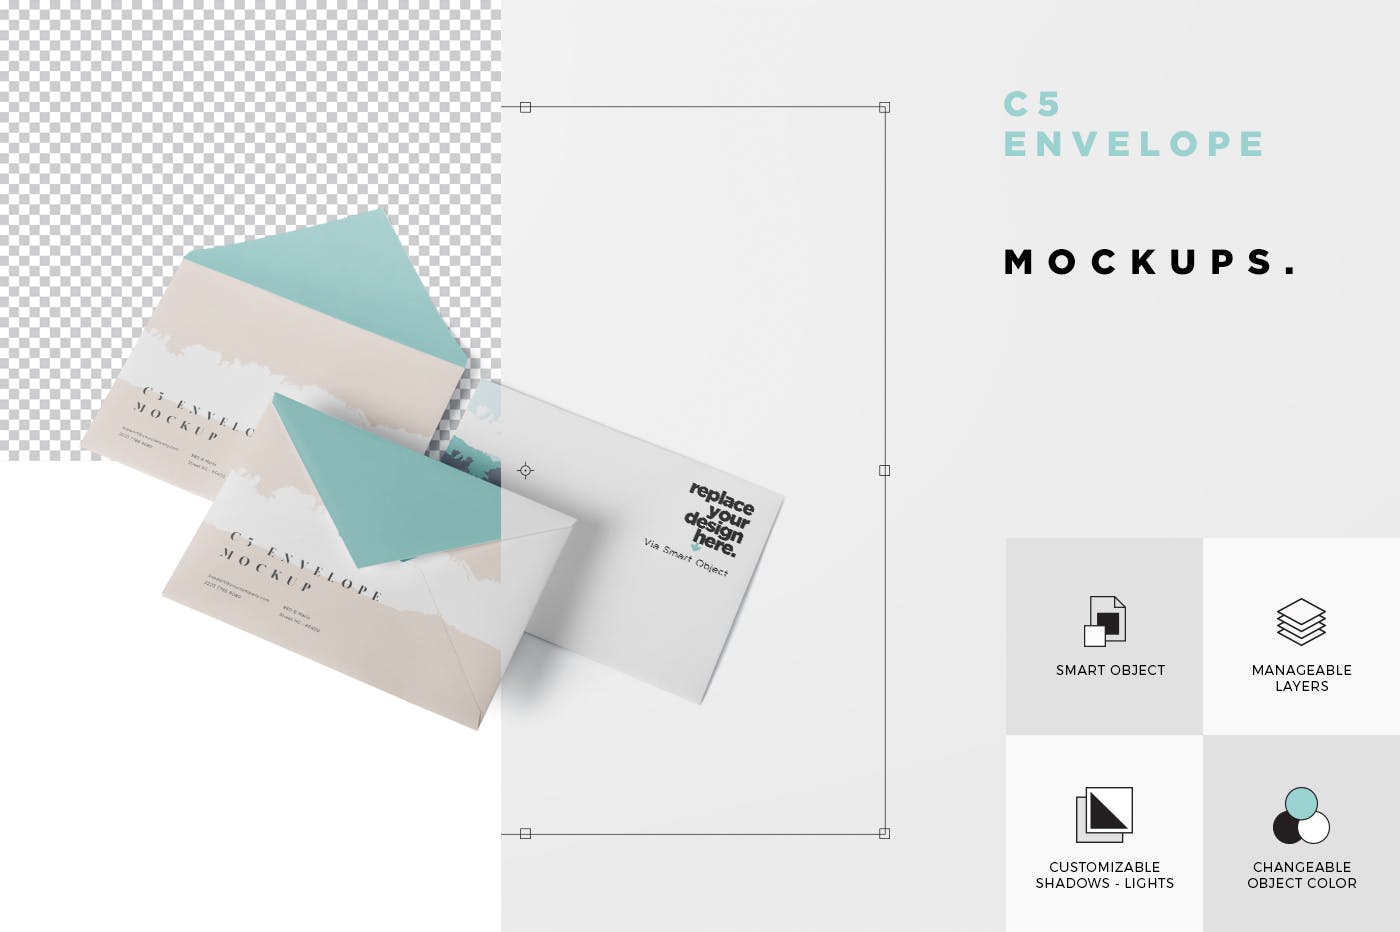 C5规格企业信封设计效果图非凡图库精选 Envelope C5 Mock-Up Set插图(5)